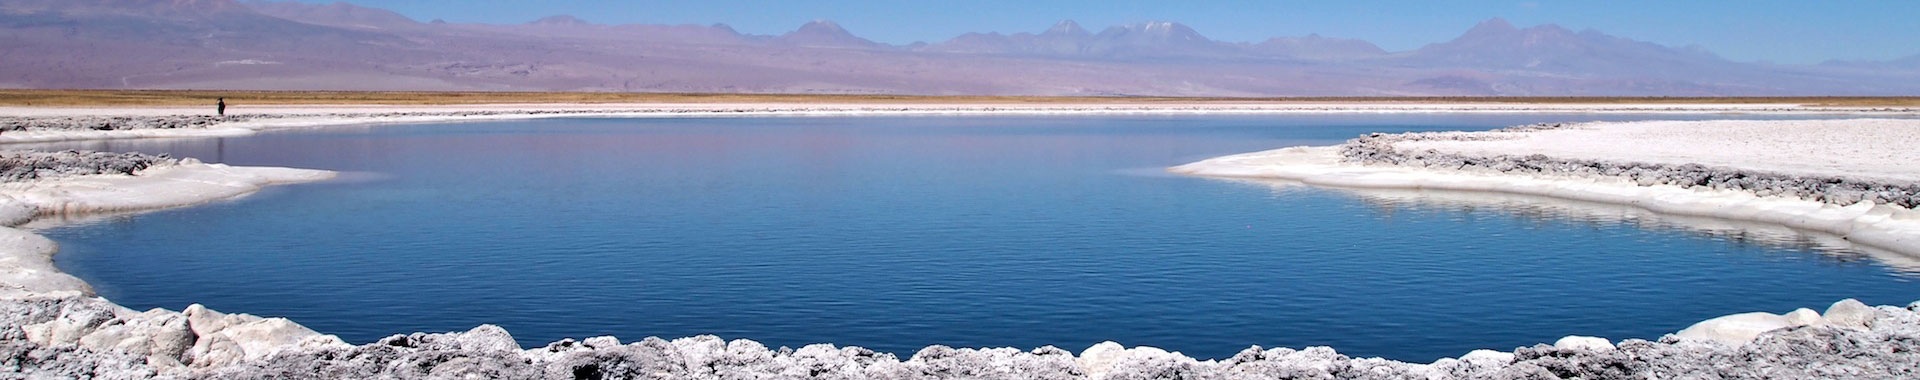 Chile - Alto Atacama - Paseos - Cejar